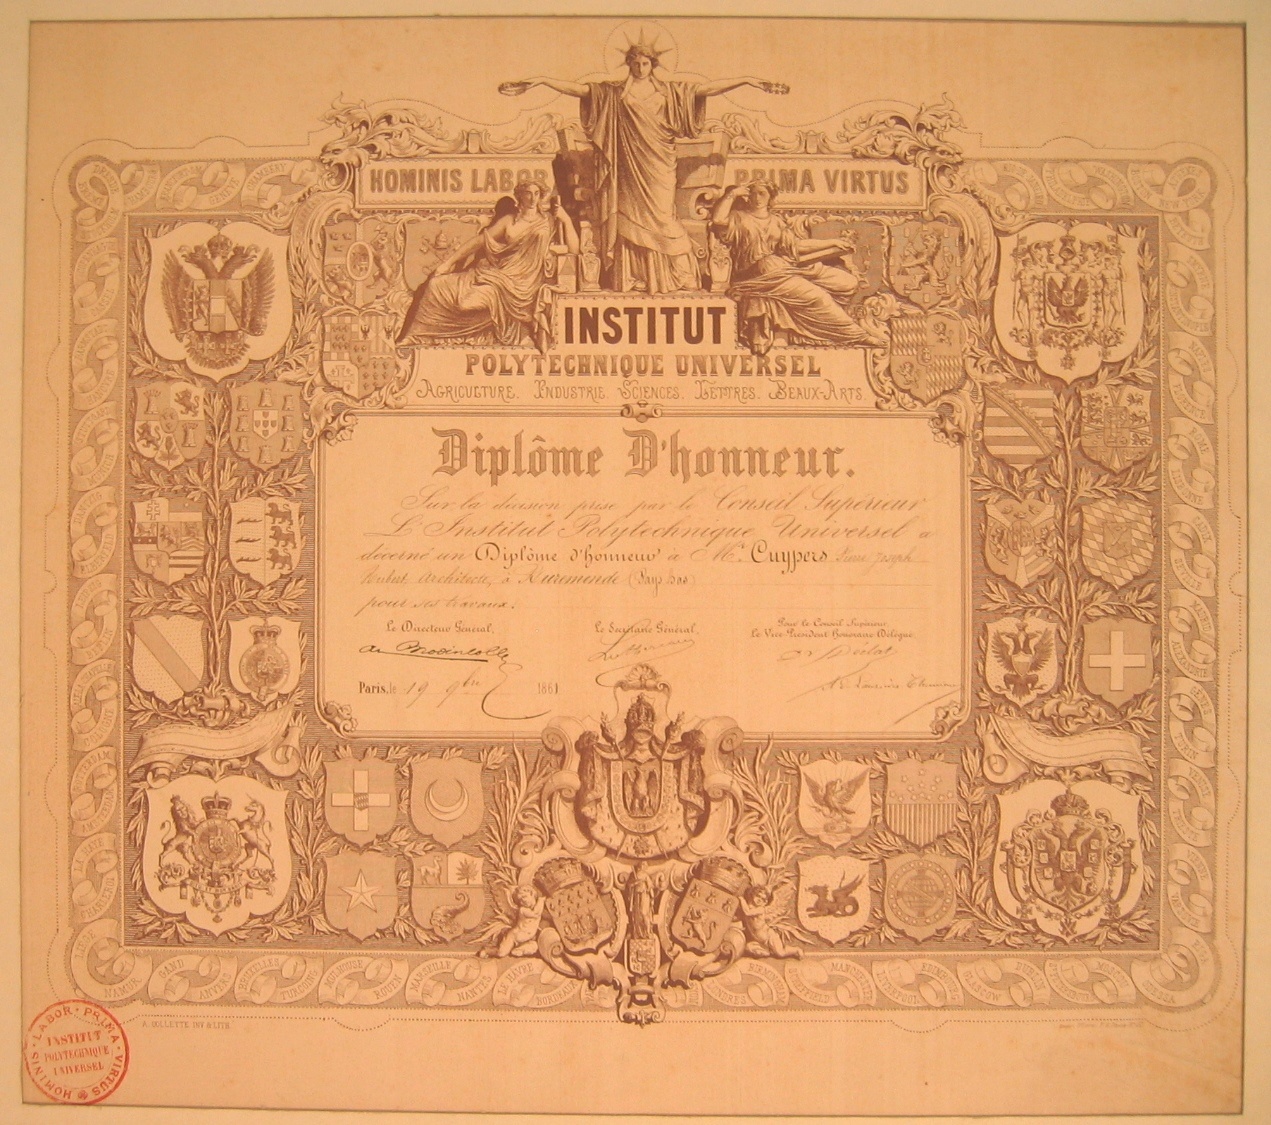 Diplôme d'Honneur van het Institut Polytechnique te Parijs voor P.J.H. Cuypers